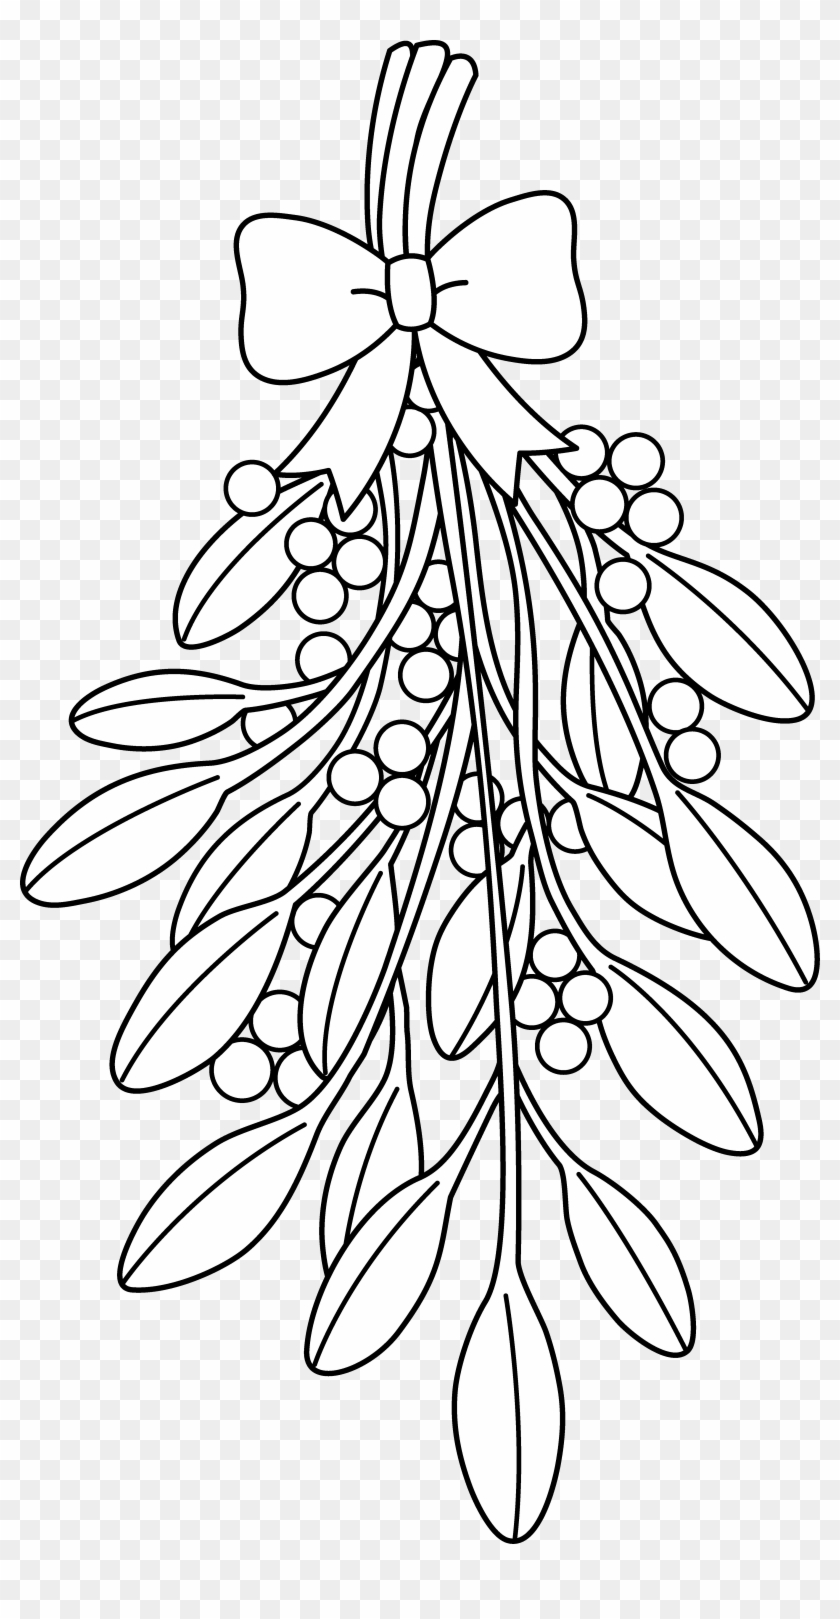 Christmas Mistletoe Line Art - Christmas Mistletoe Coloring Pages #382512